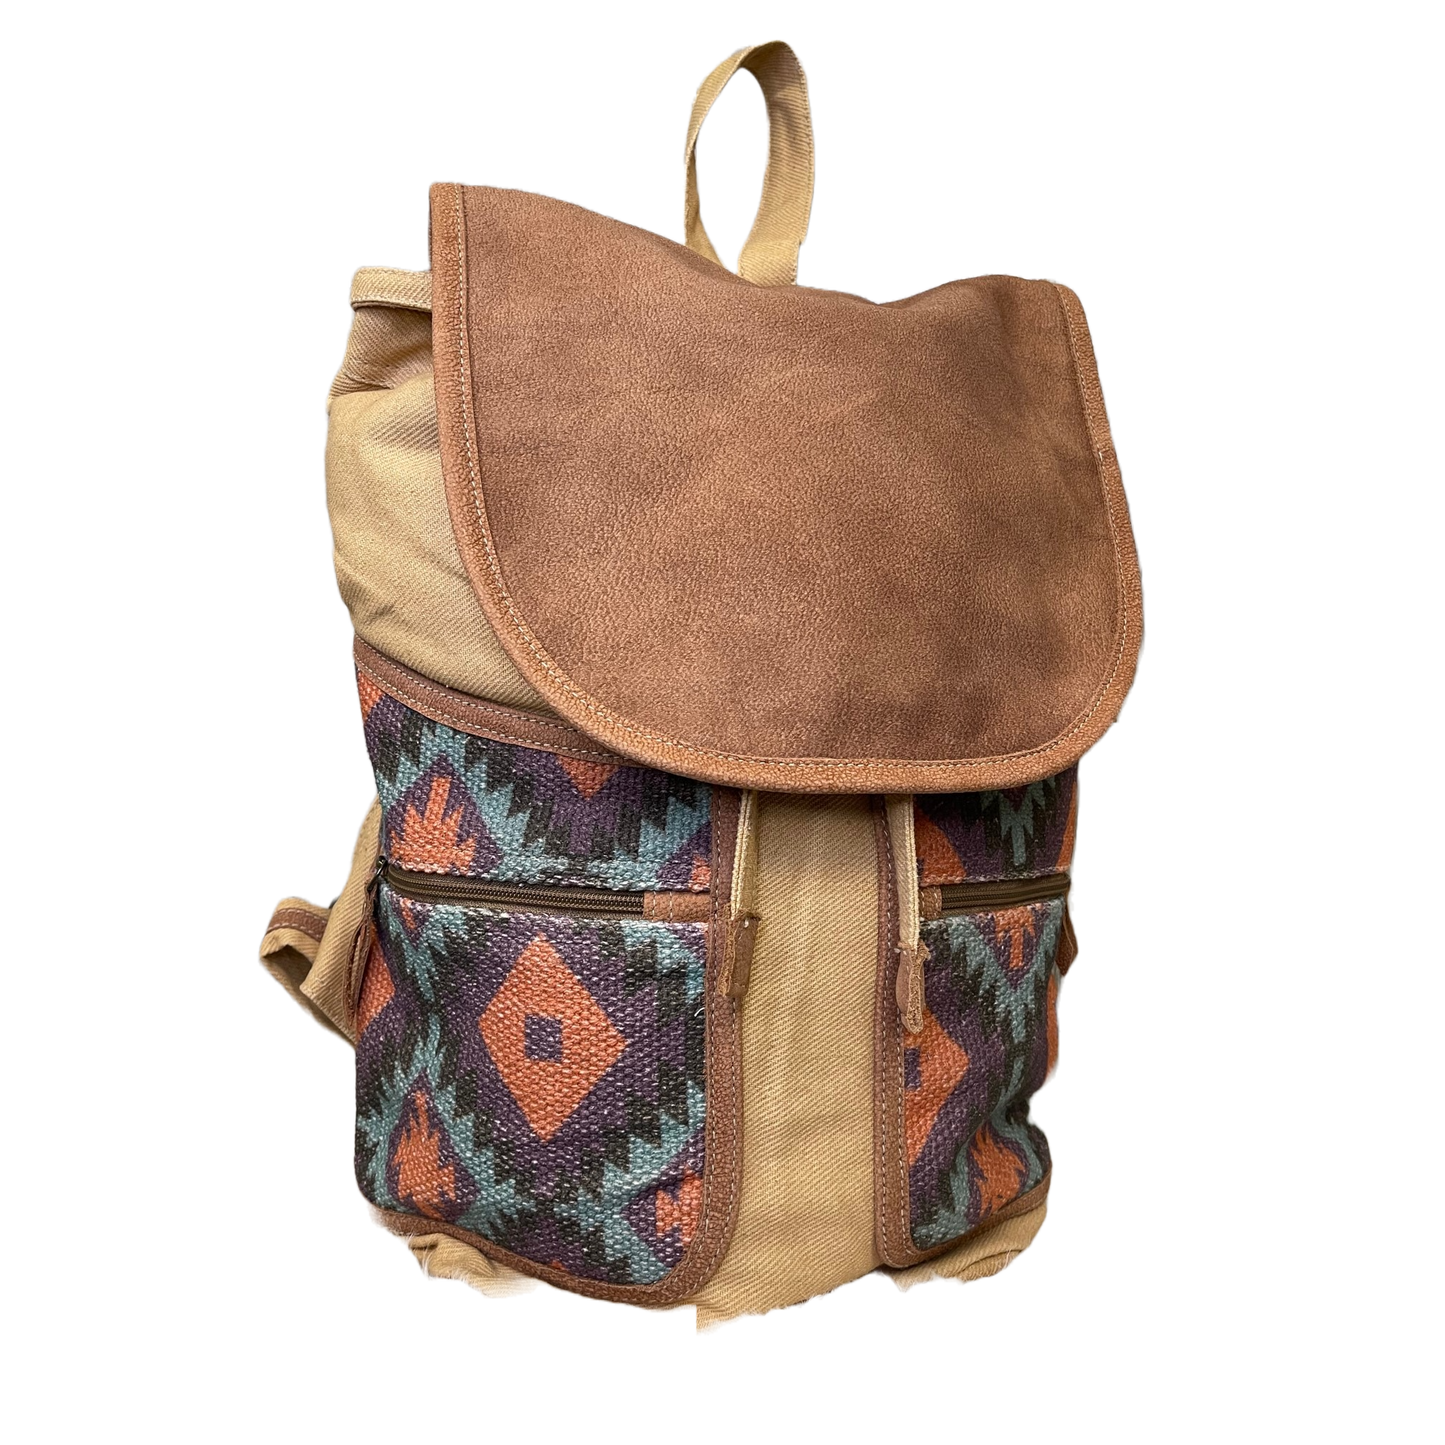 Olay Aztec Print Tan Backpack LB178